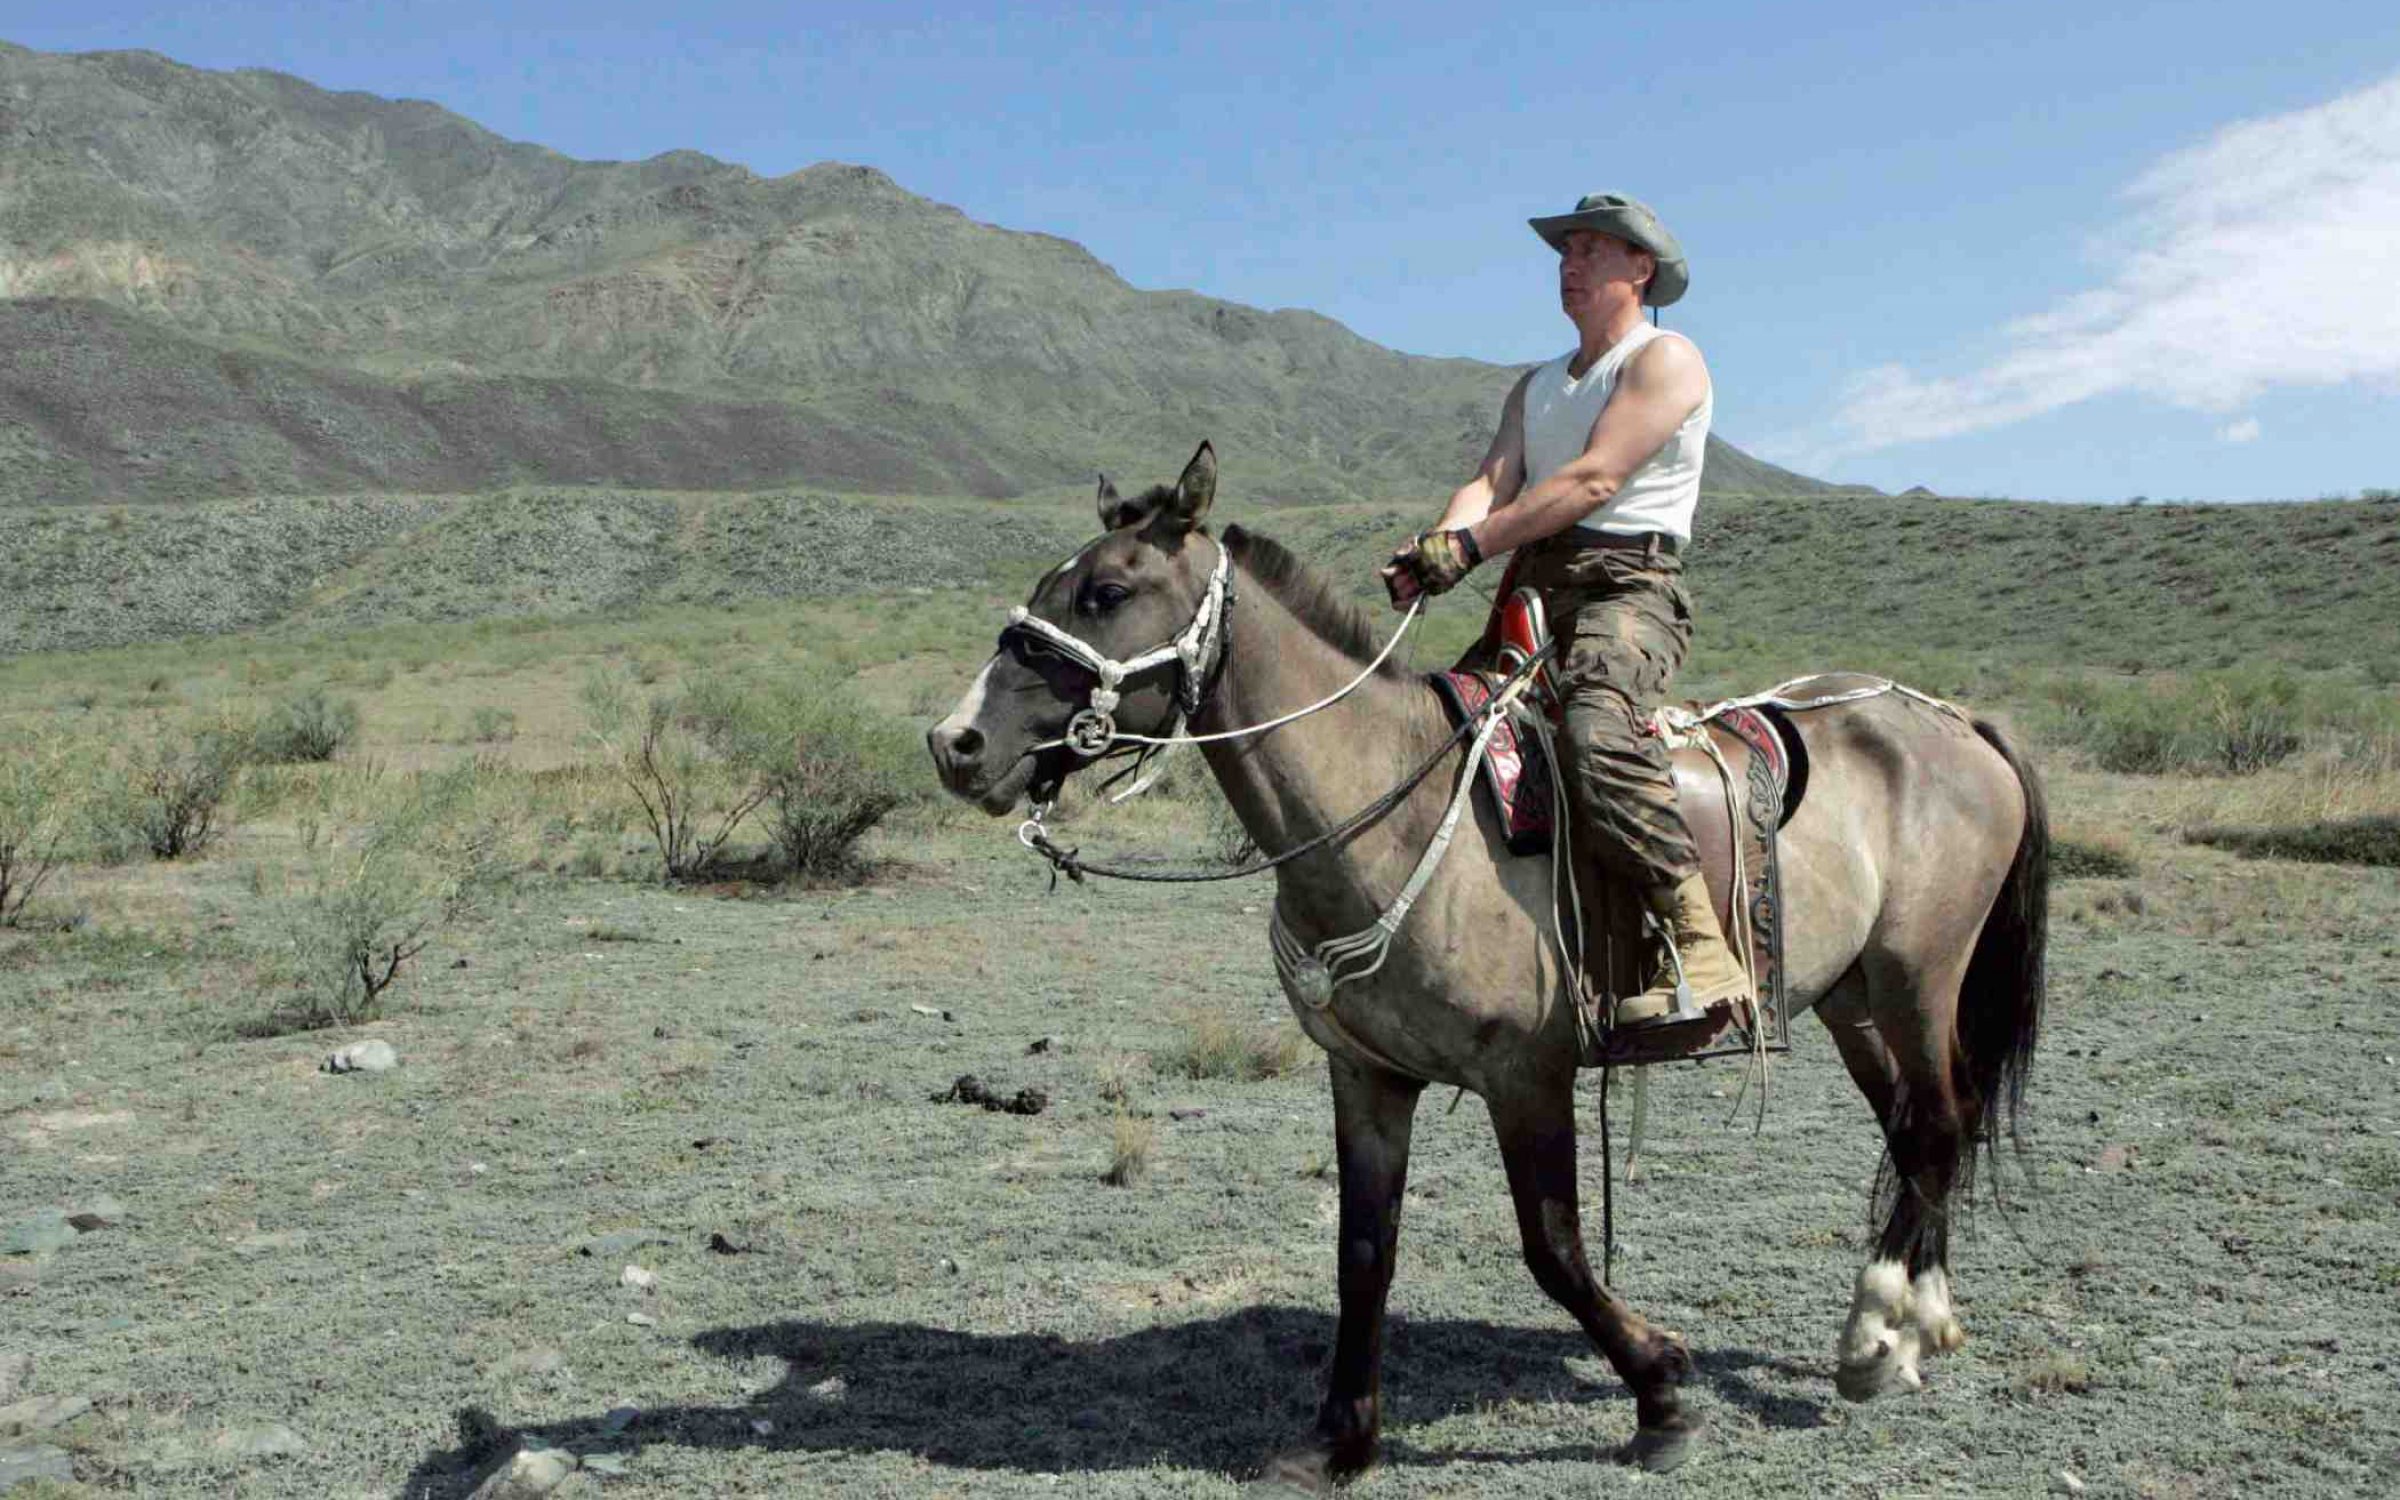 Putin on horseback